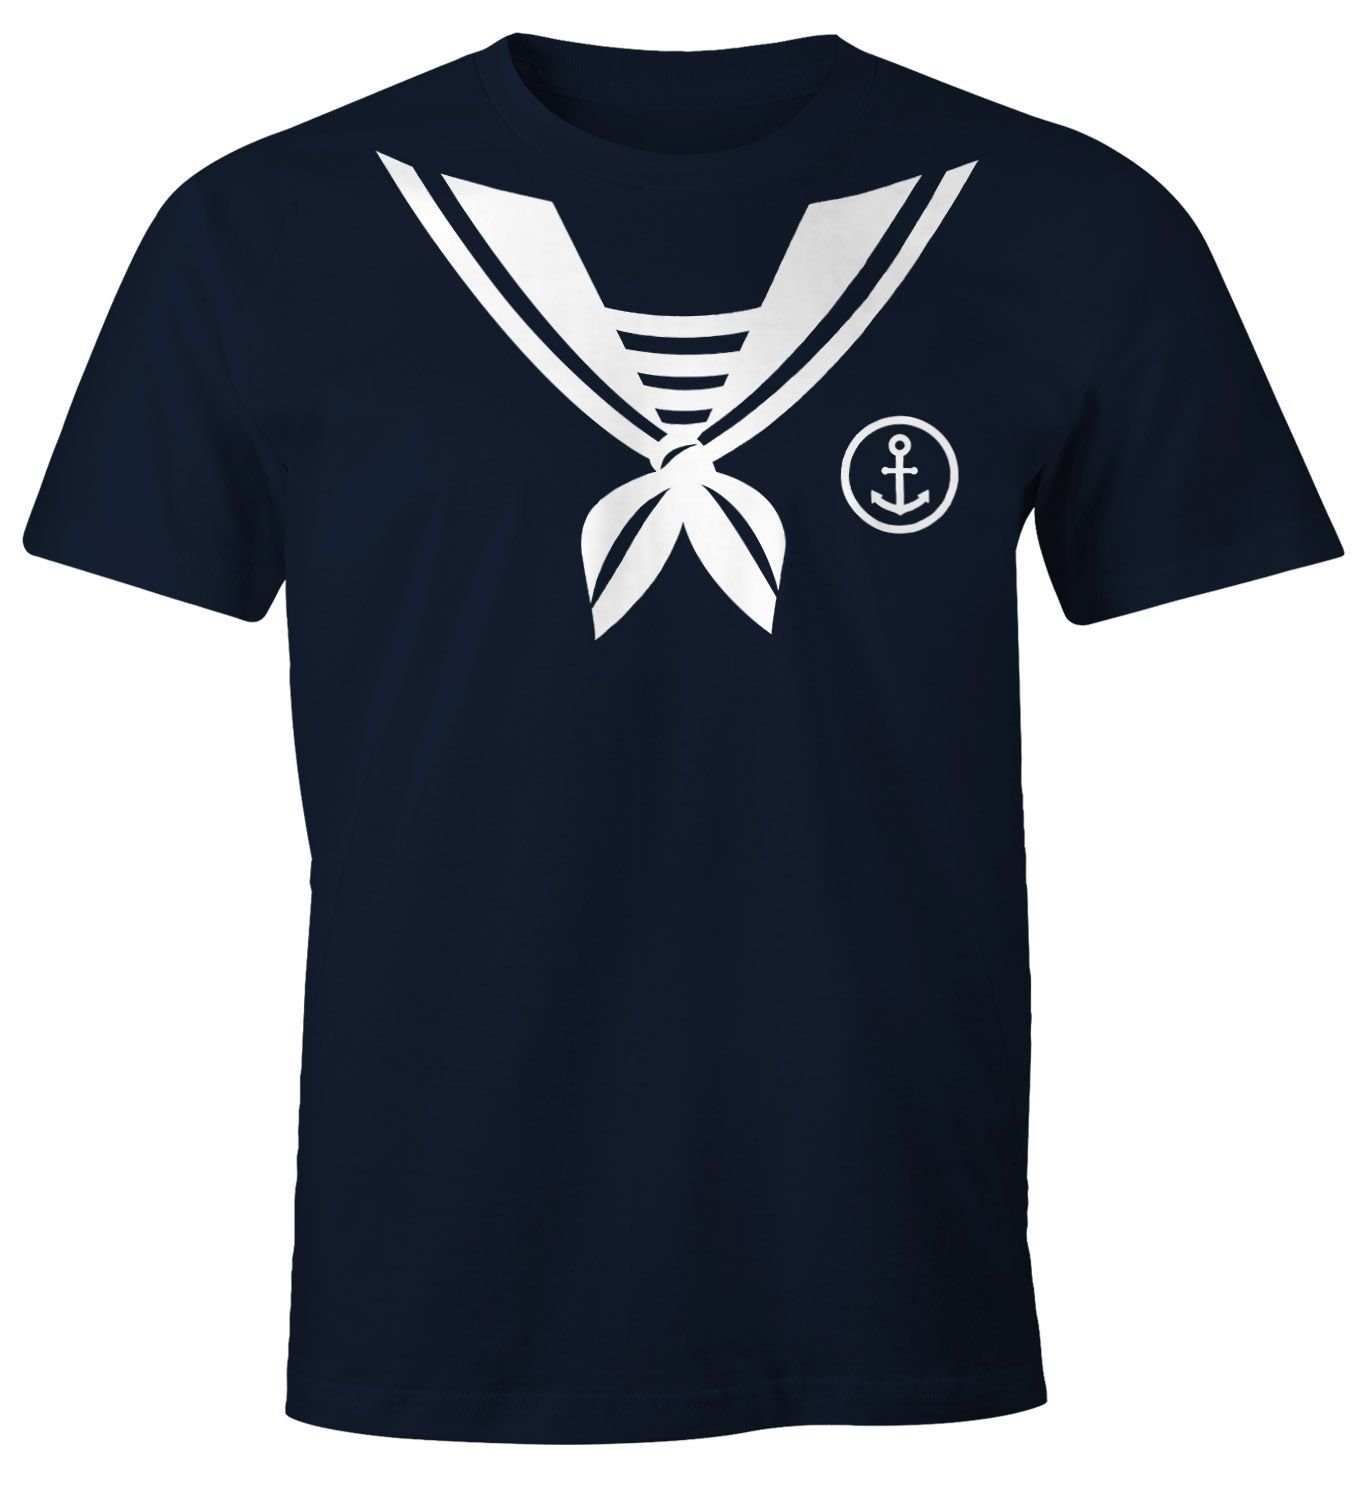 MoonWorks Print-Shirt Herren T-Shirt Matrose Sailor Fasching Fasching-Shirt Fun-Shirt Karneval Fastnacht Moonworks® mit Print navy